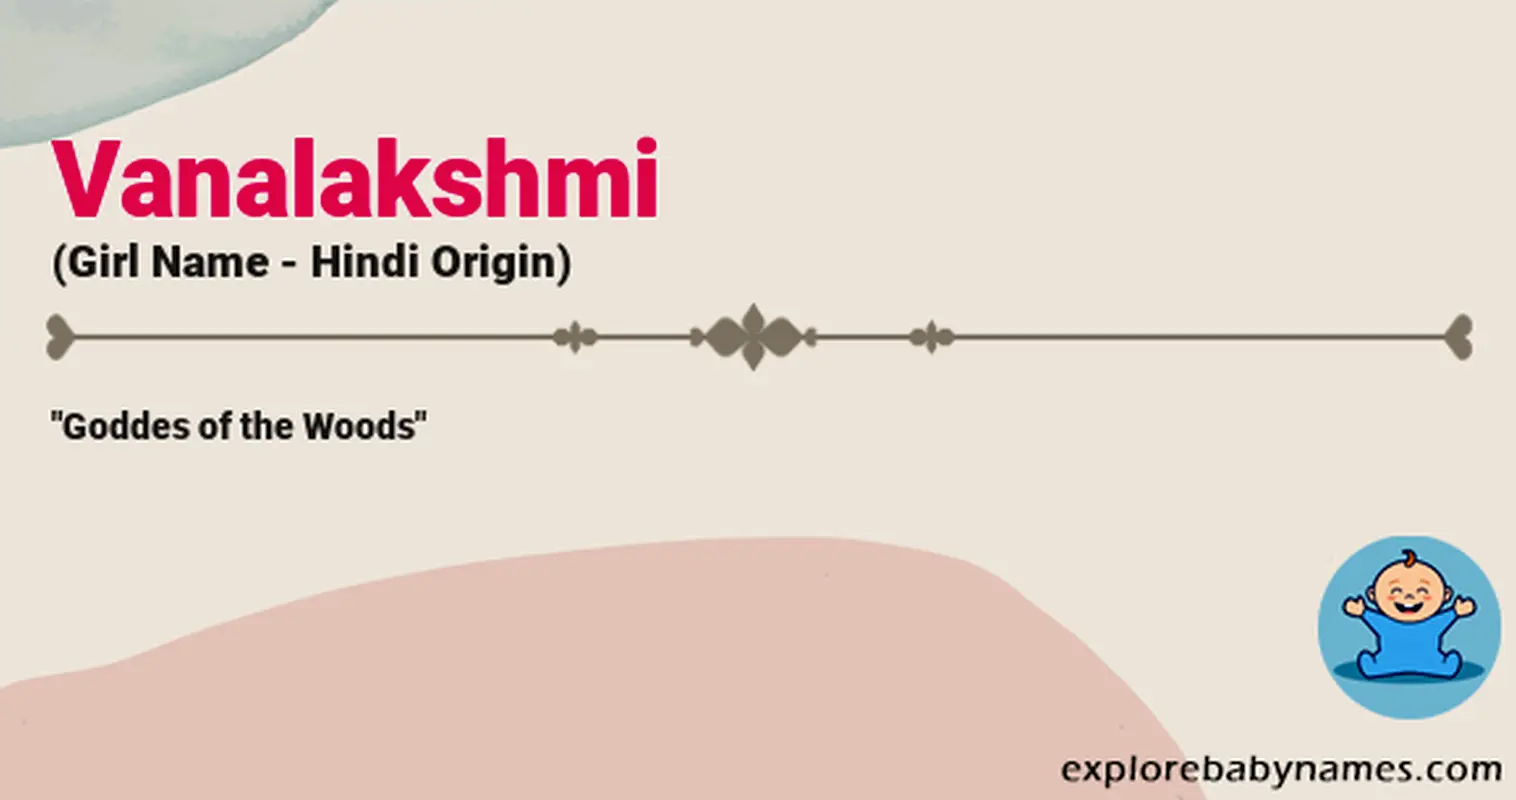 Meaning of Vanalakshmi